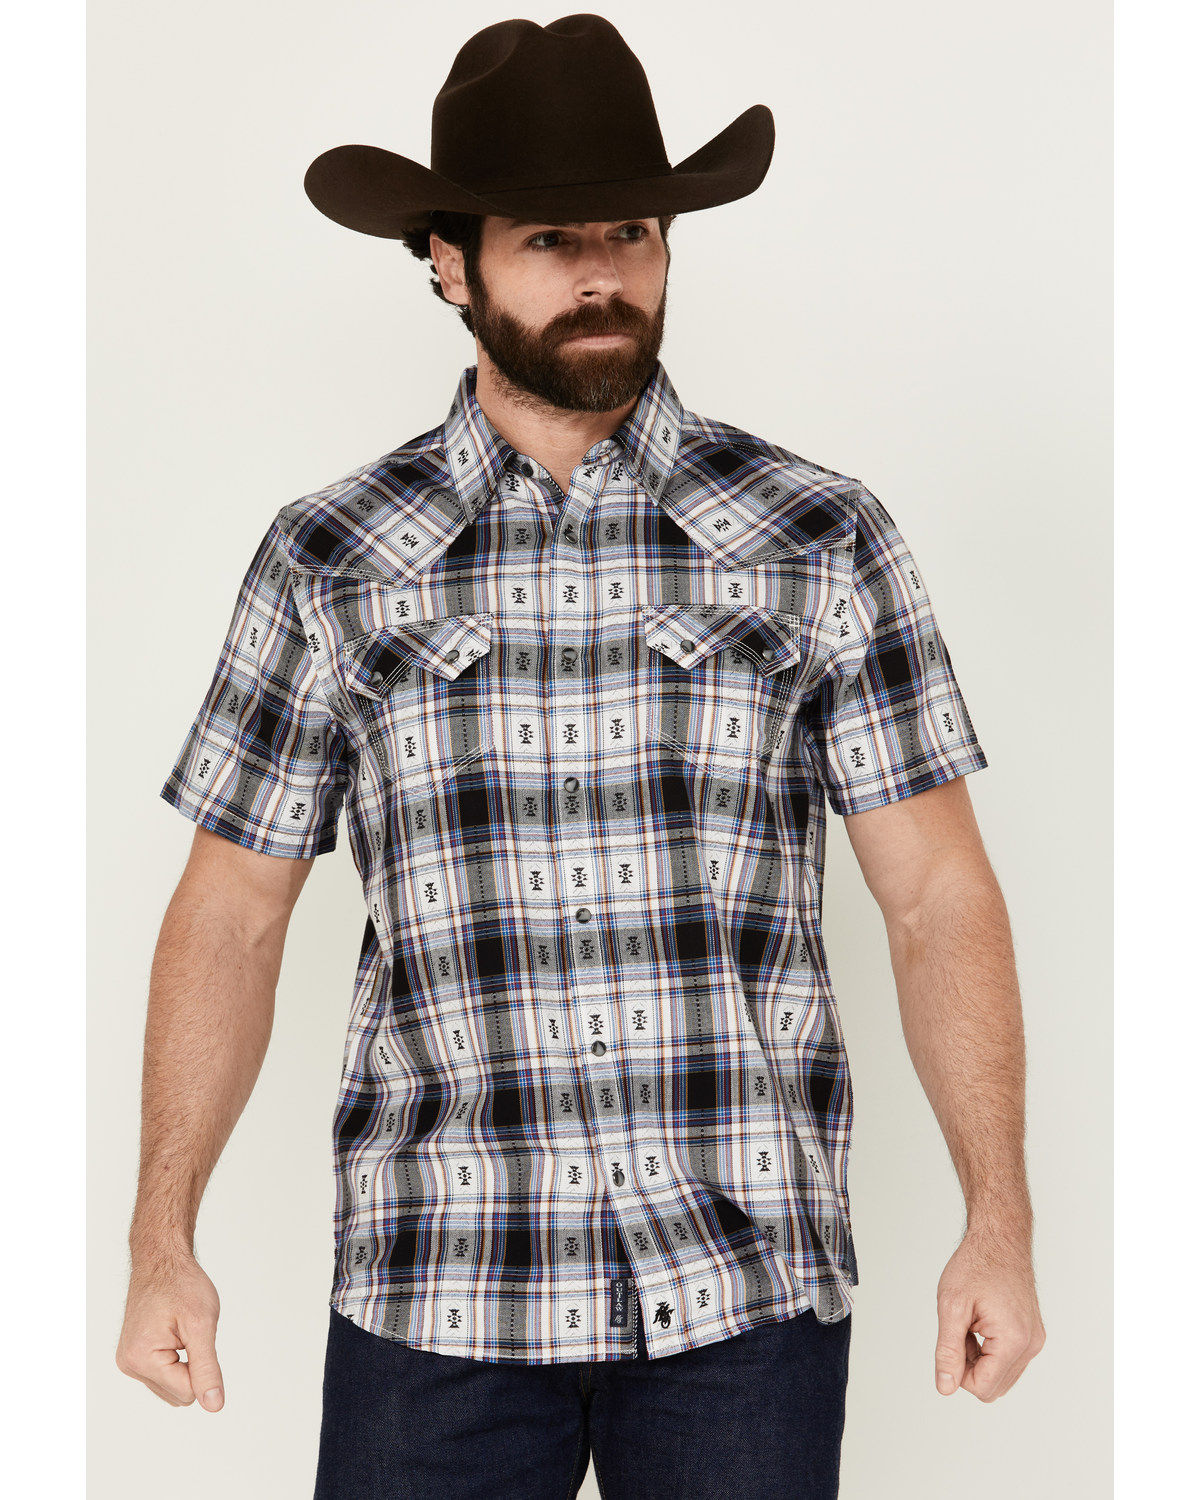 Moonshine Spirit Men's Wreckless Plaid Print Short Sleeve Snap Western Shirt